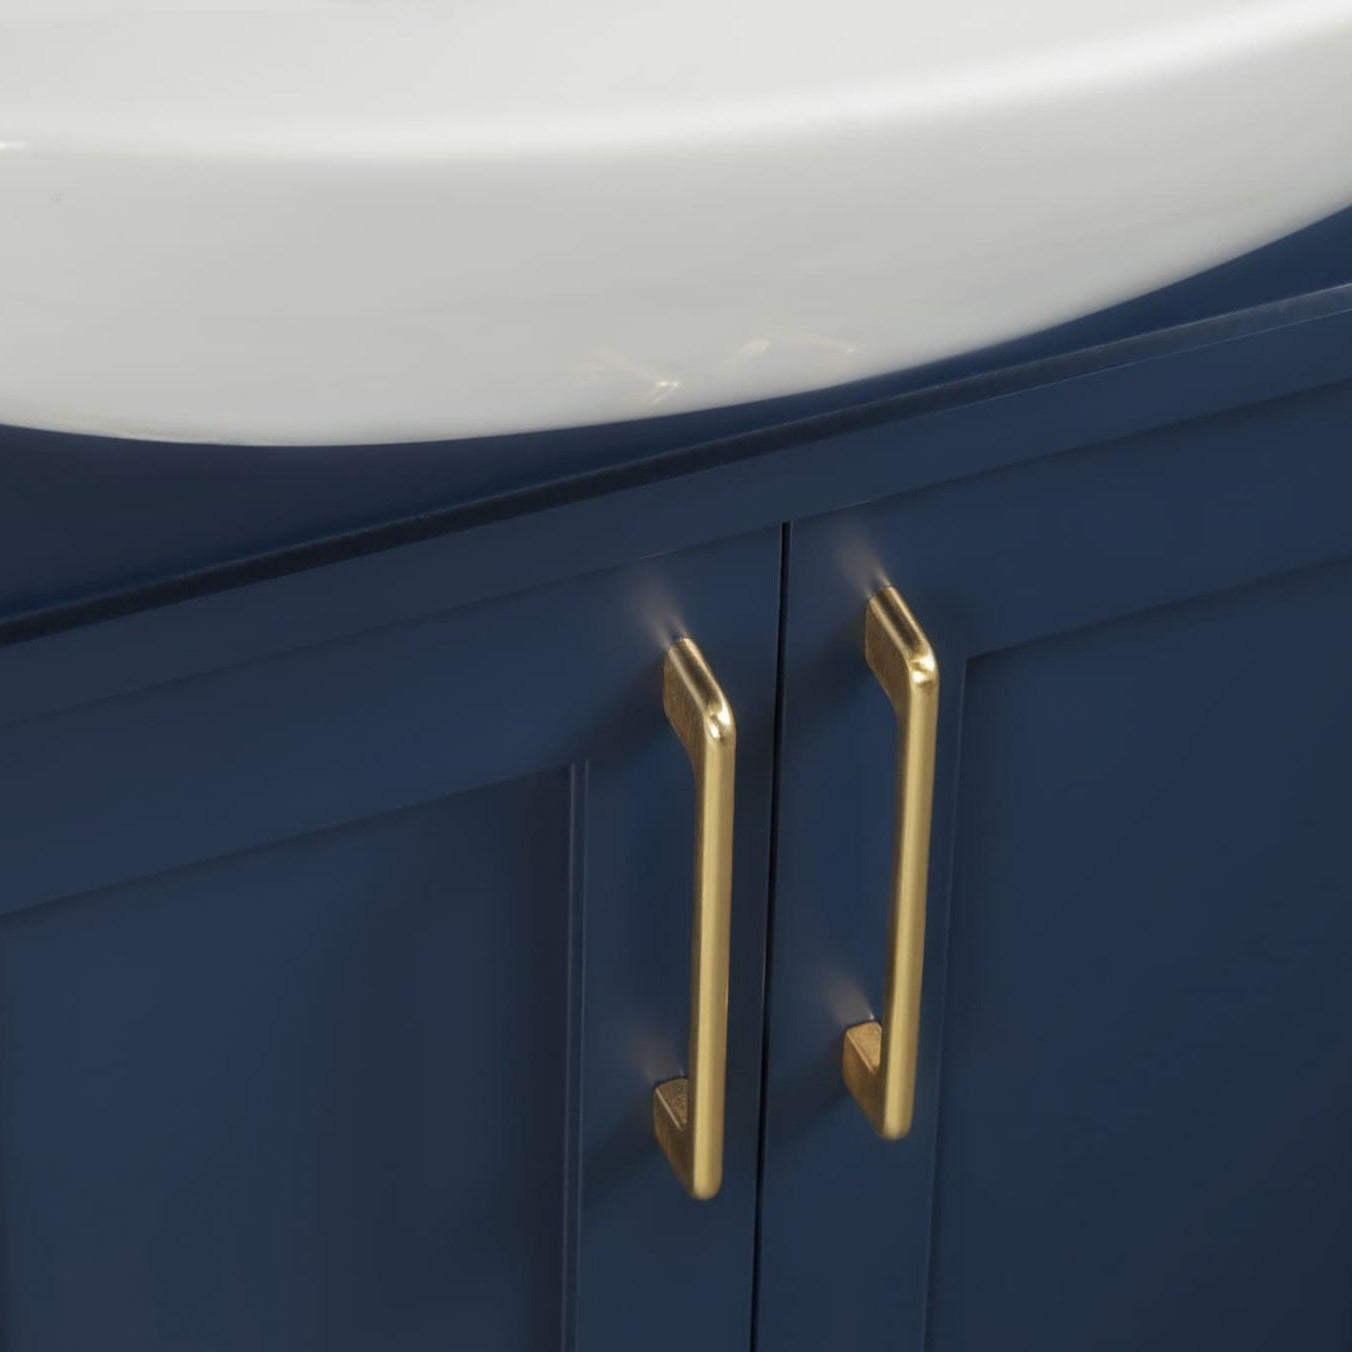 Luna Bathroom Vanity Homelero 24" #size_24" #color_navy blue #hardware_brass